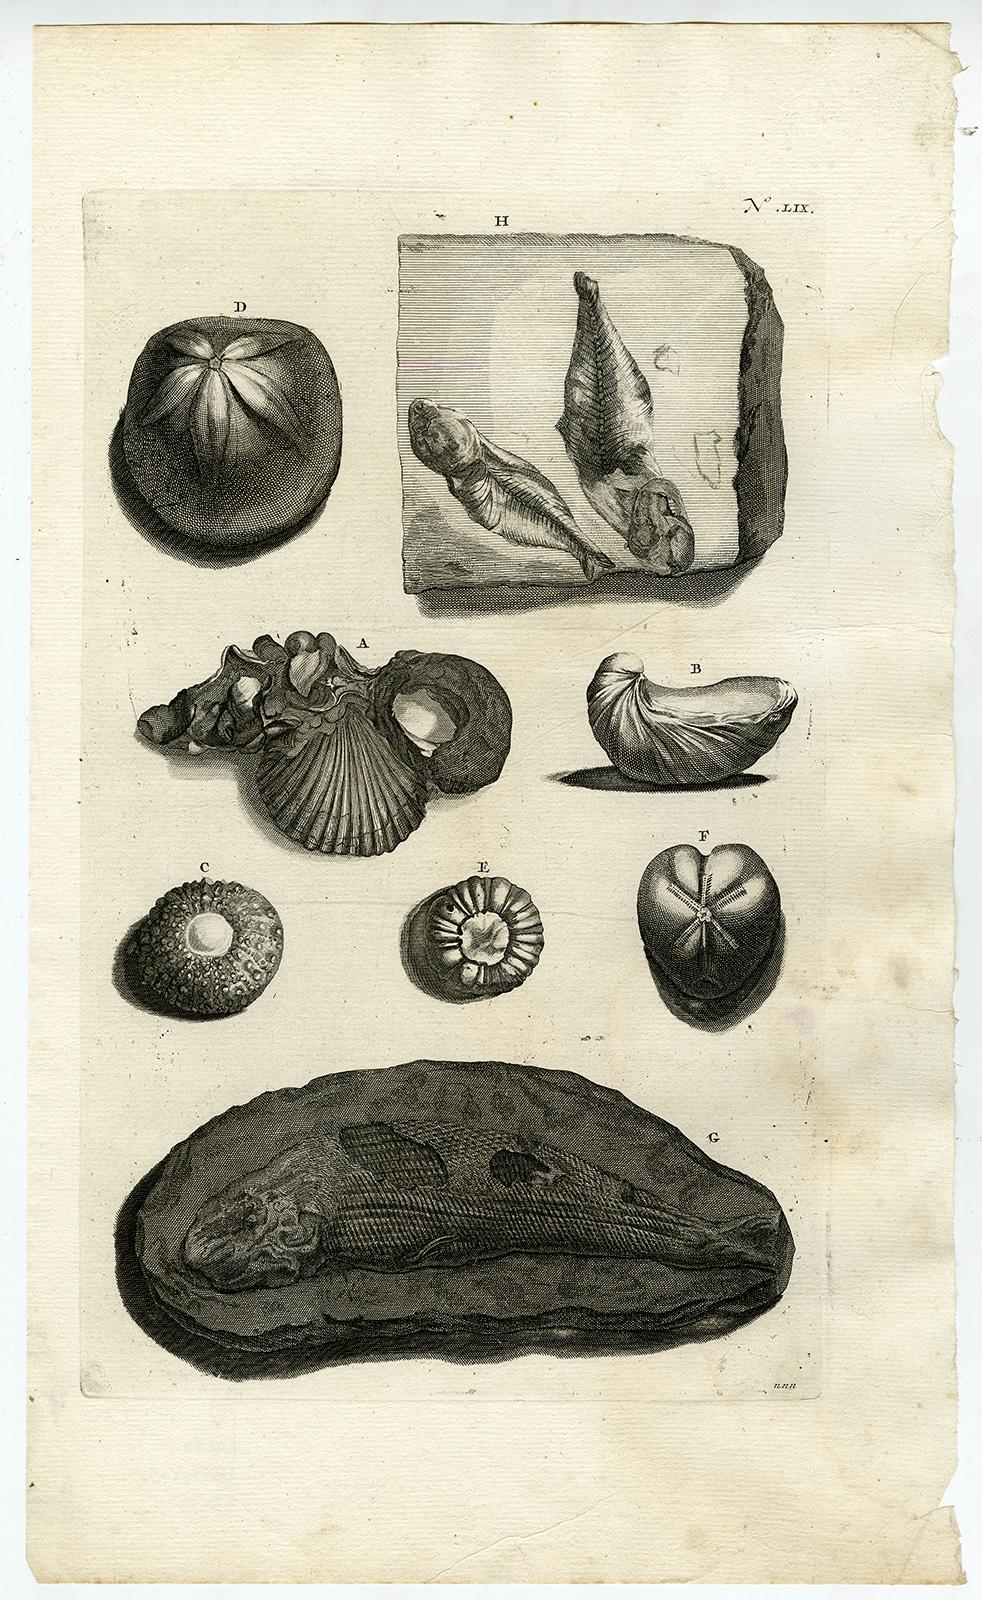 Jorg Eberhardt Rumph Animal Print - Fossilized shells and fish - Ambonian Cabinet of Curiosities - Rumphius - 18th c